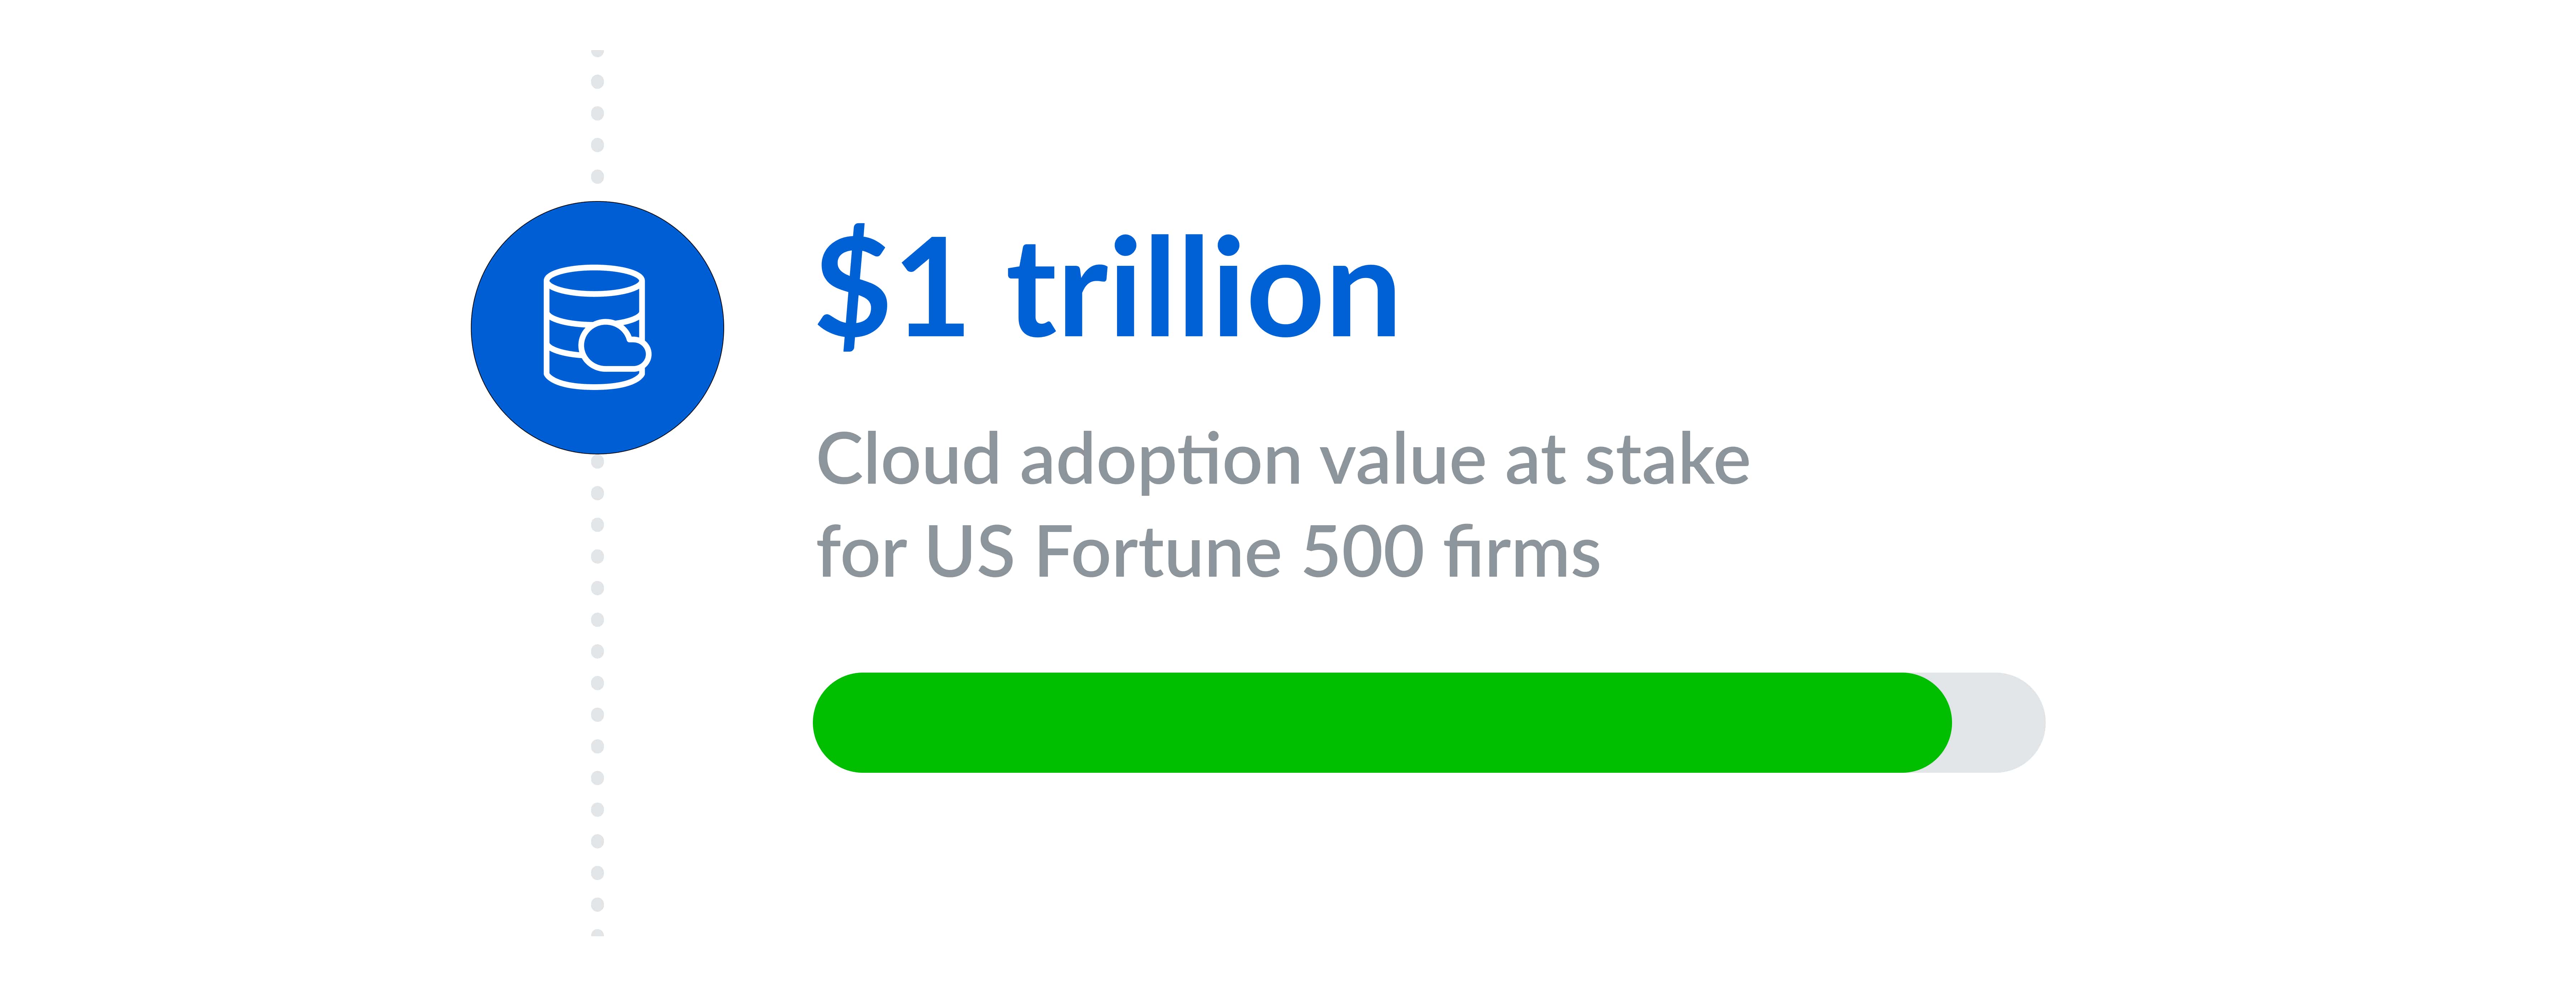 Cloud adoption value at stake